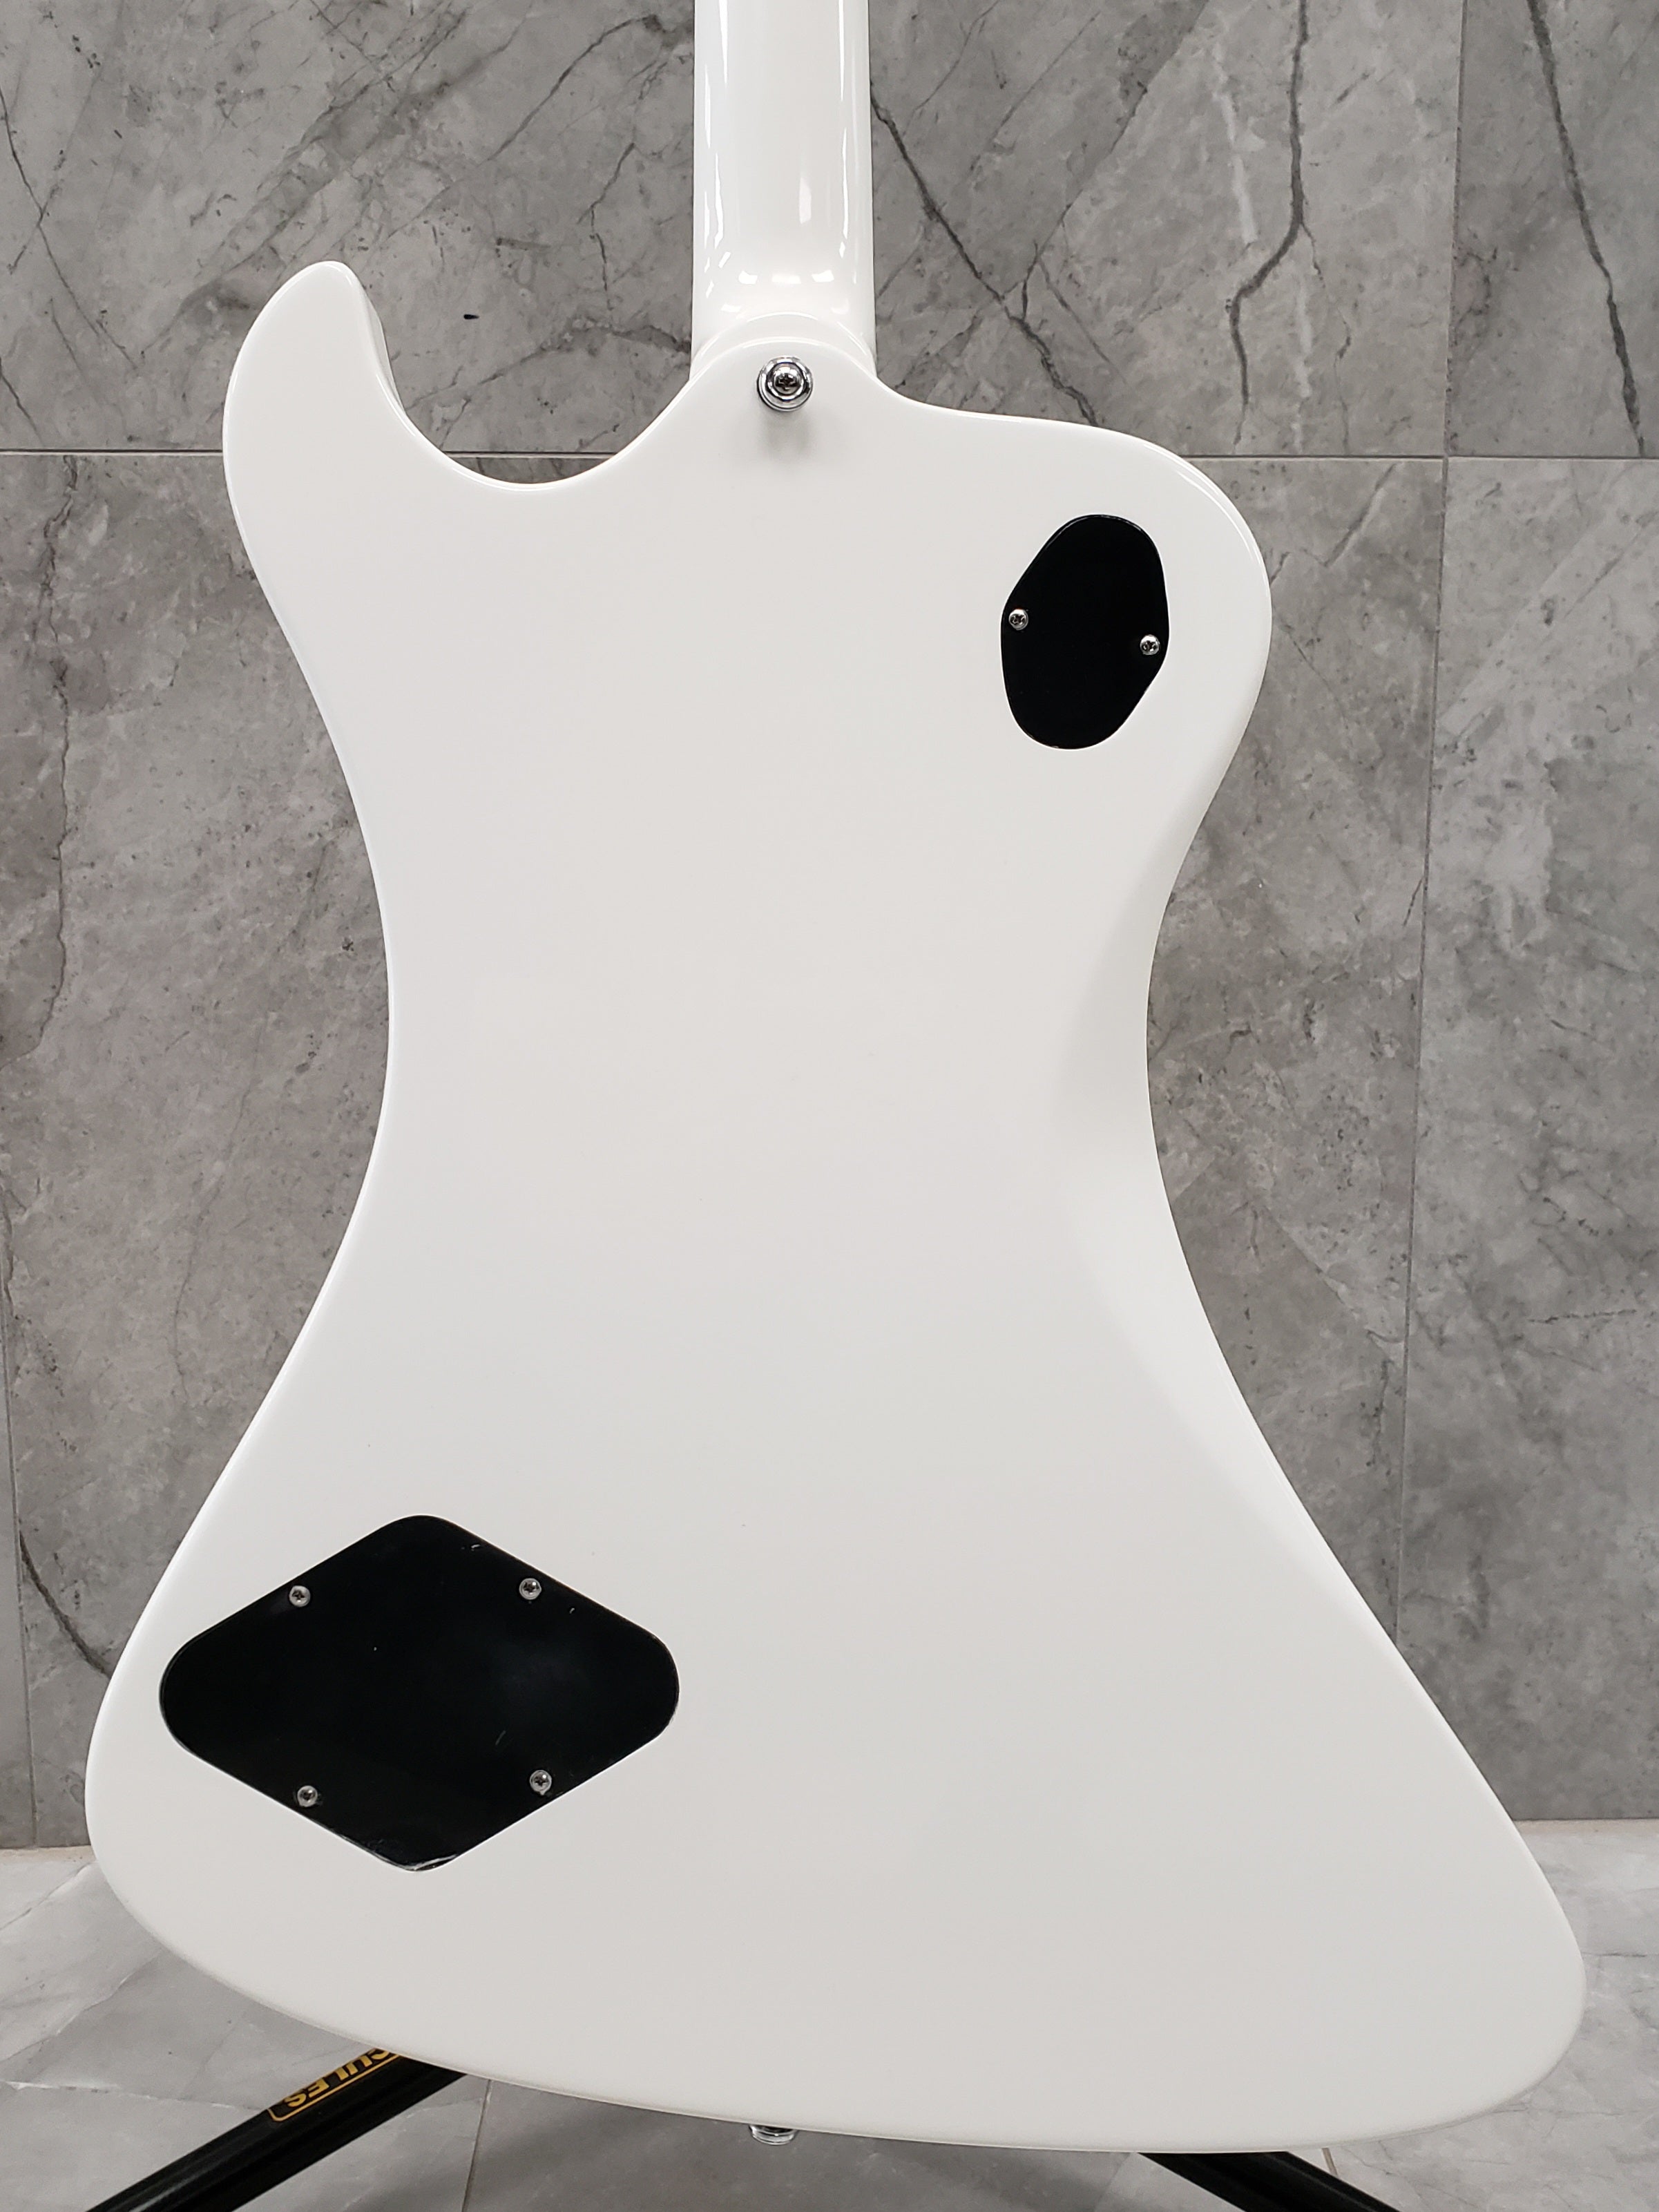 Hagstrom FANT-WHT Fantomen all MAHOGANY Electric Guitar White w/ set neck 